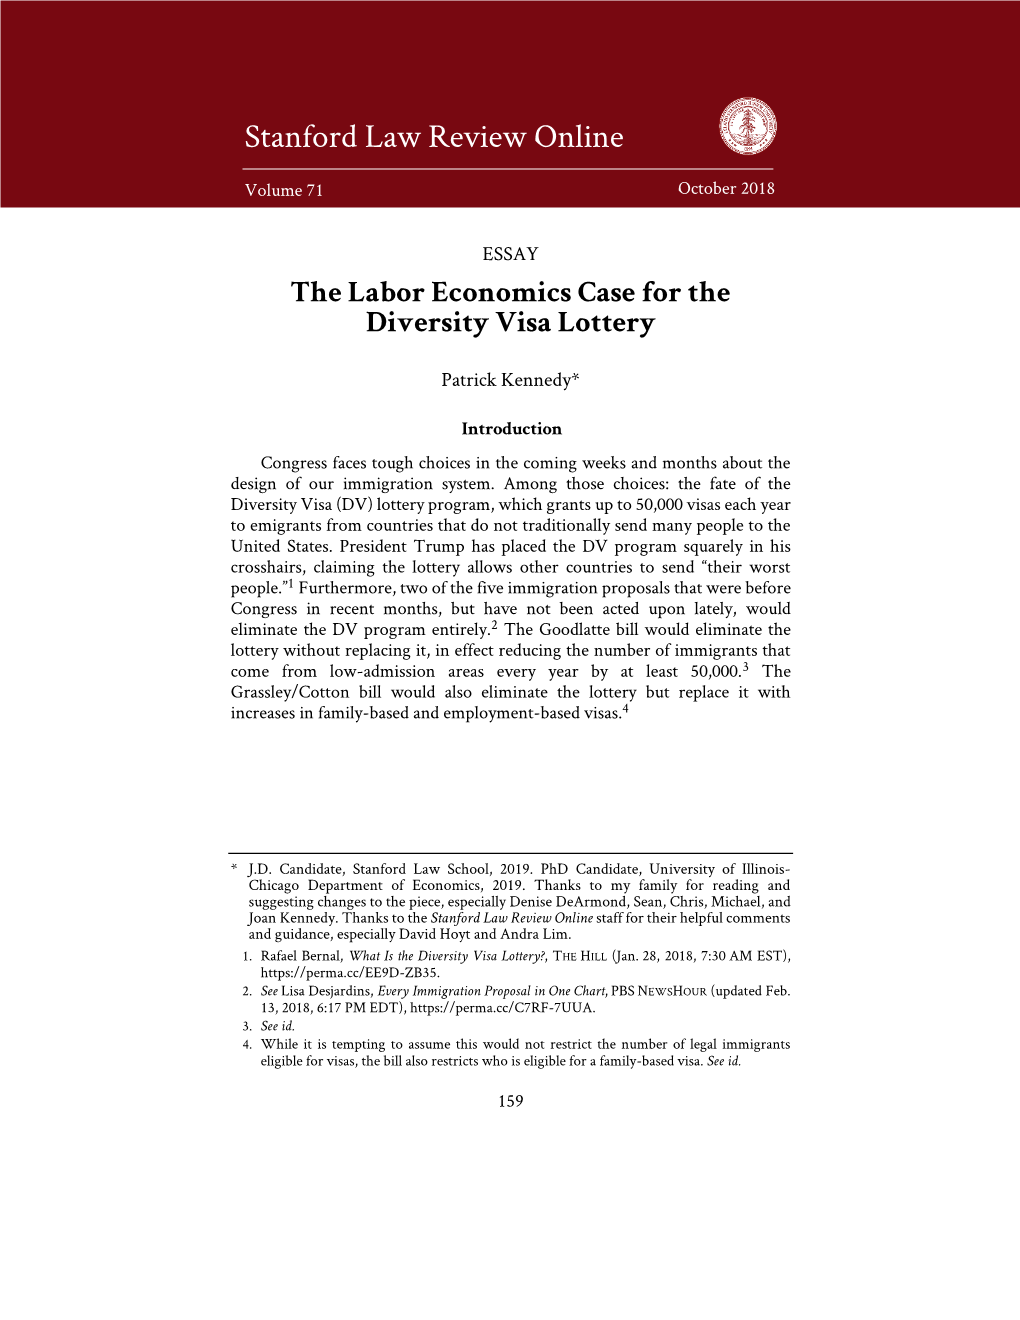 The Labor Economics Case for the Diversity Visa Lottery